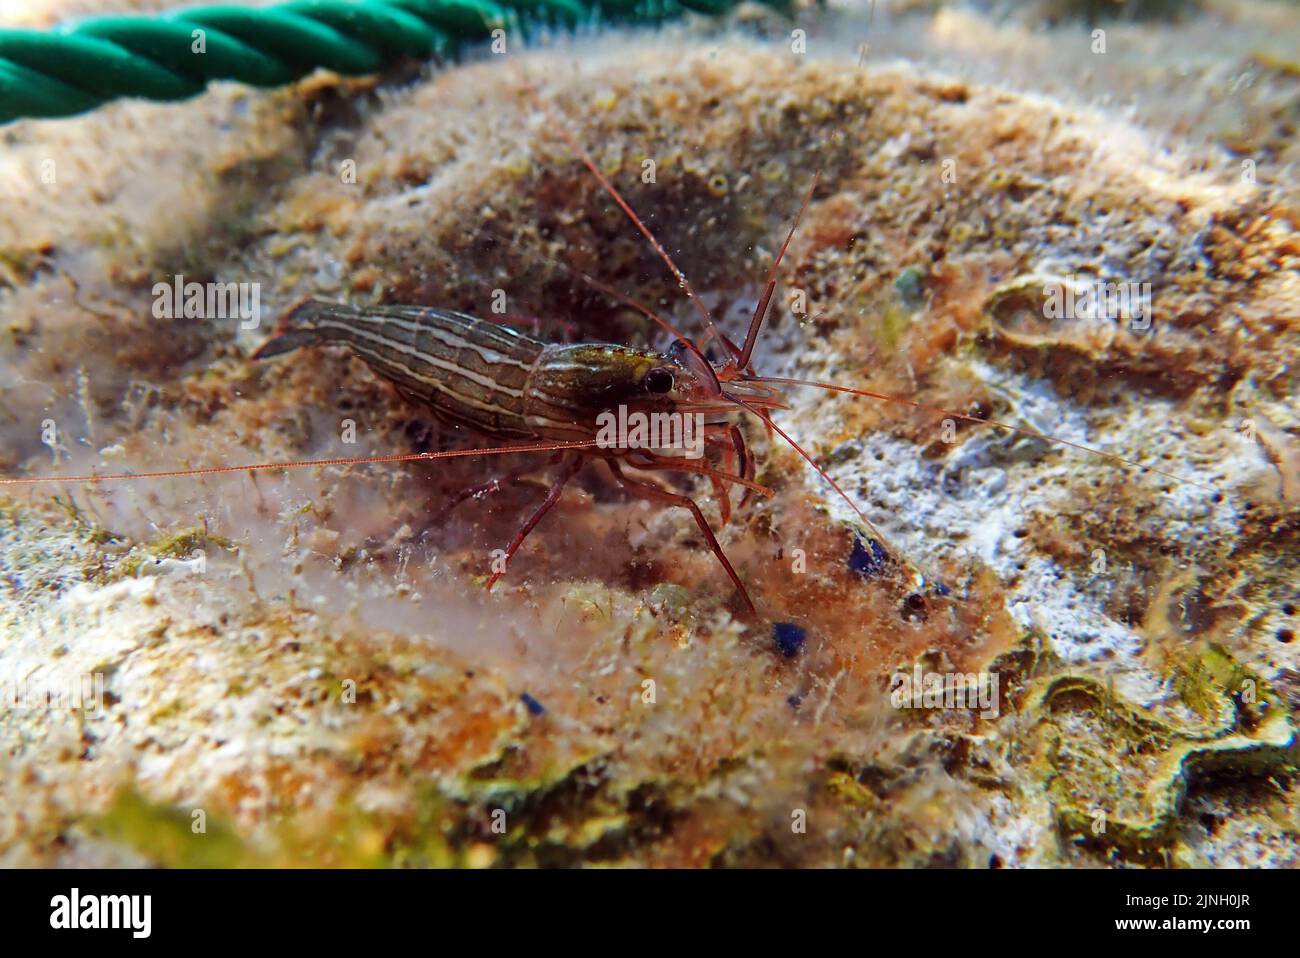 Red Monaco Peppermint shrimp, undersea photography Stock Photo